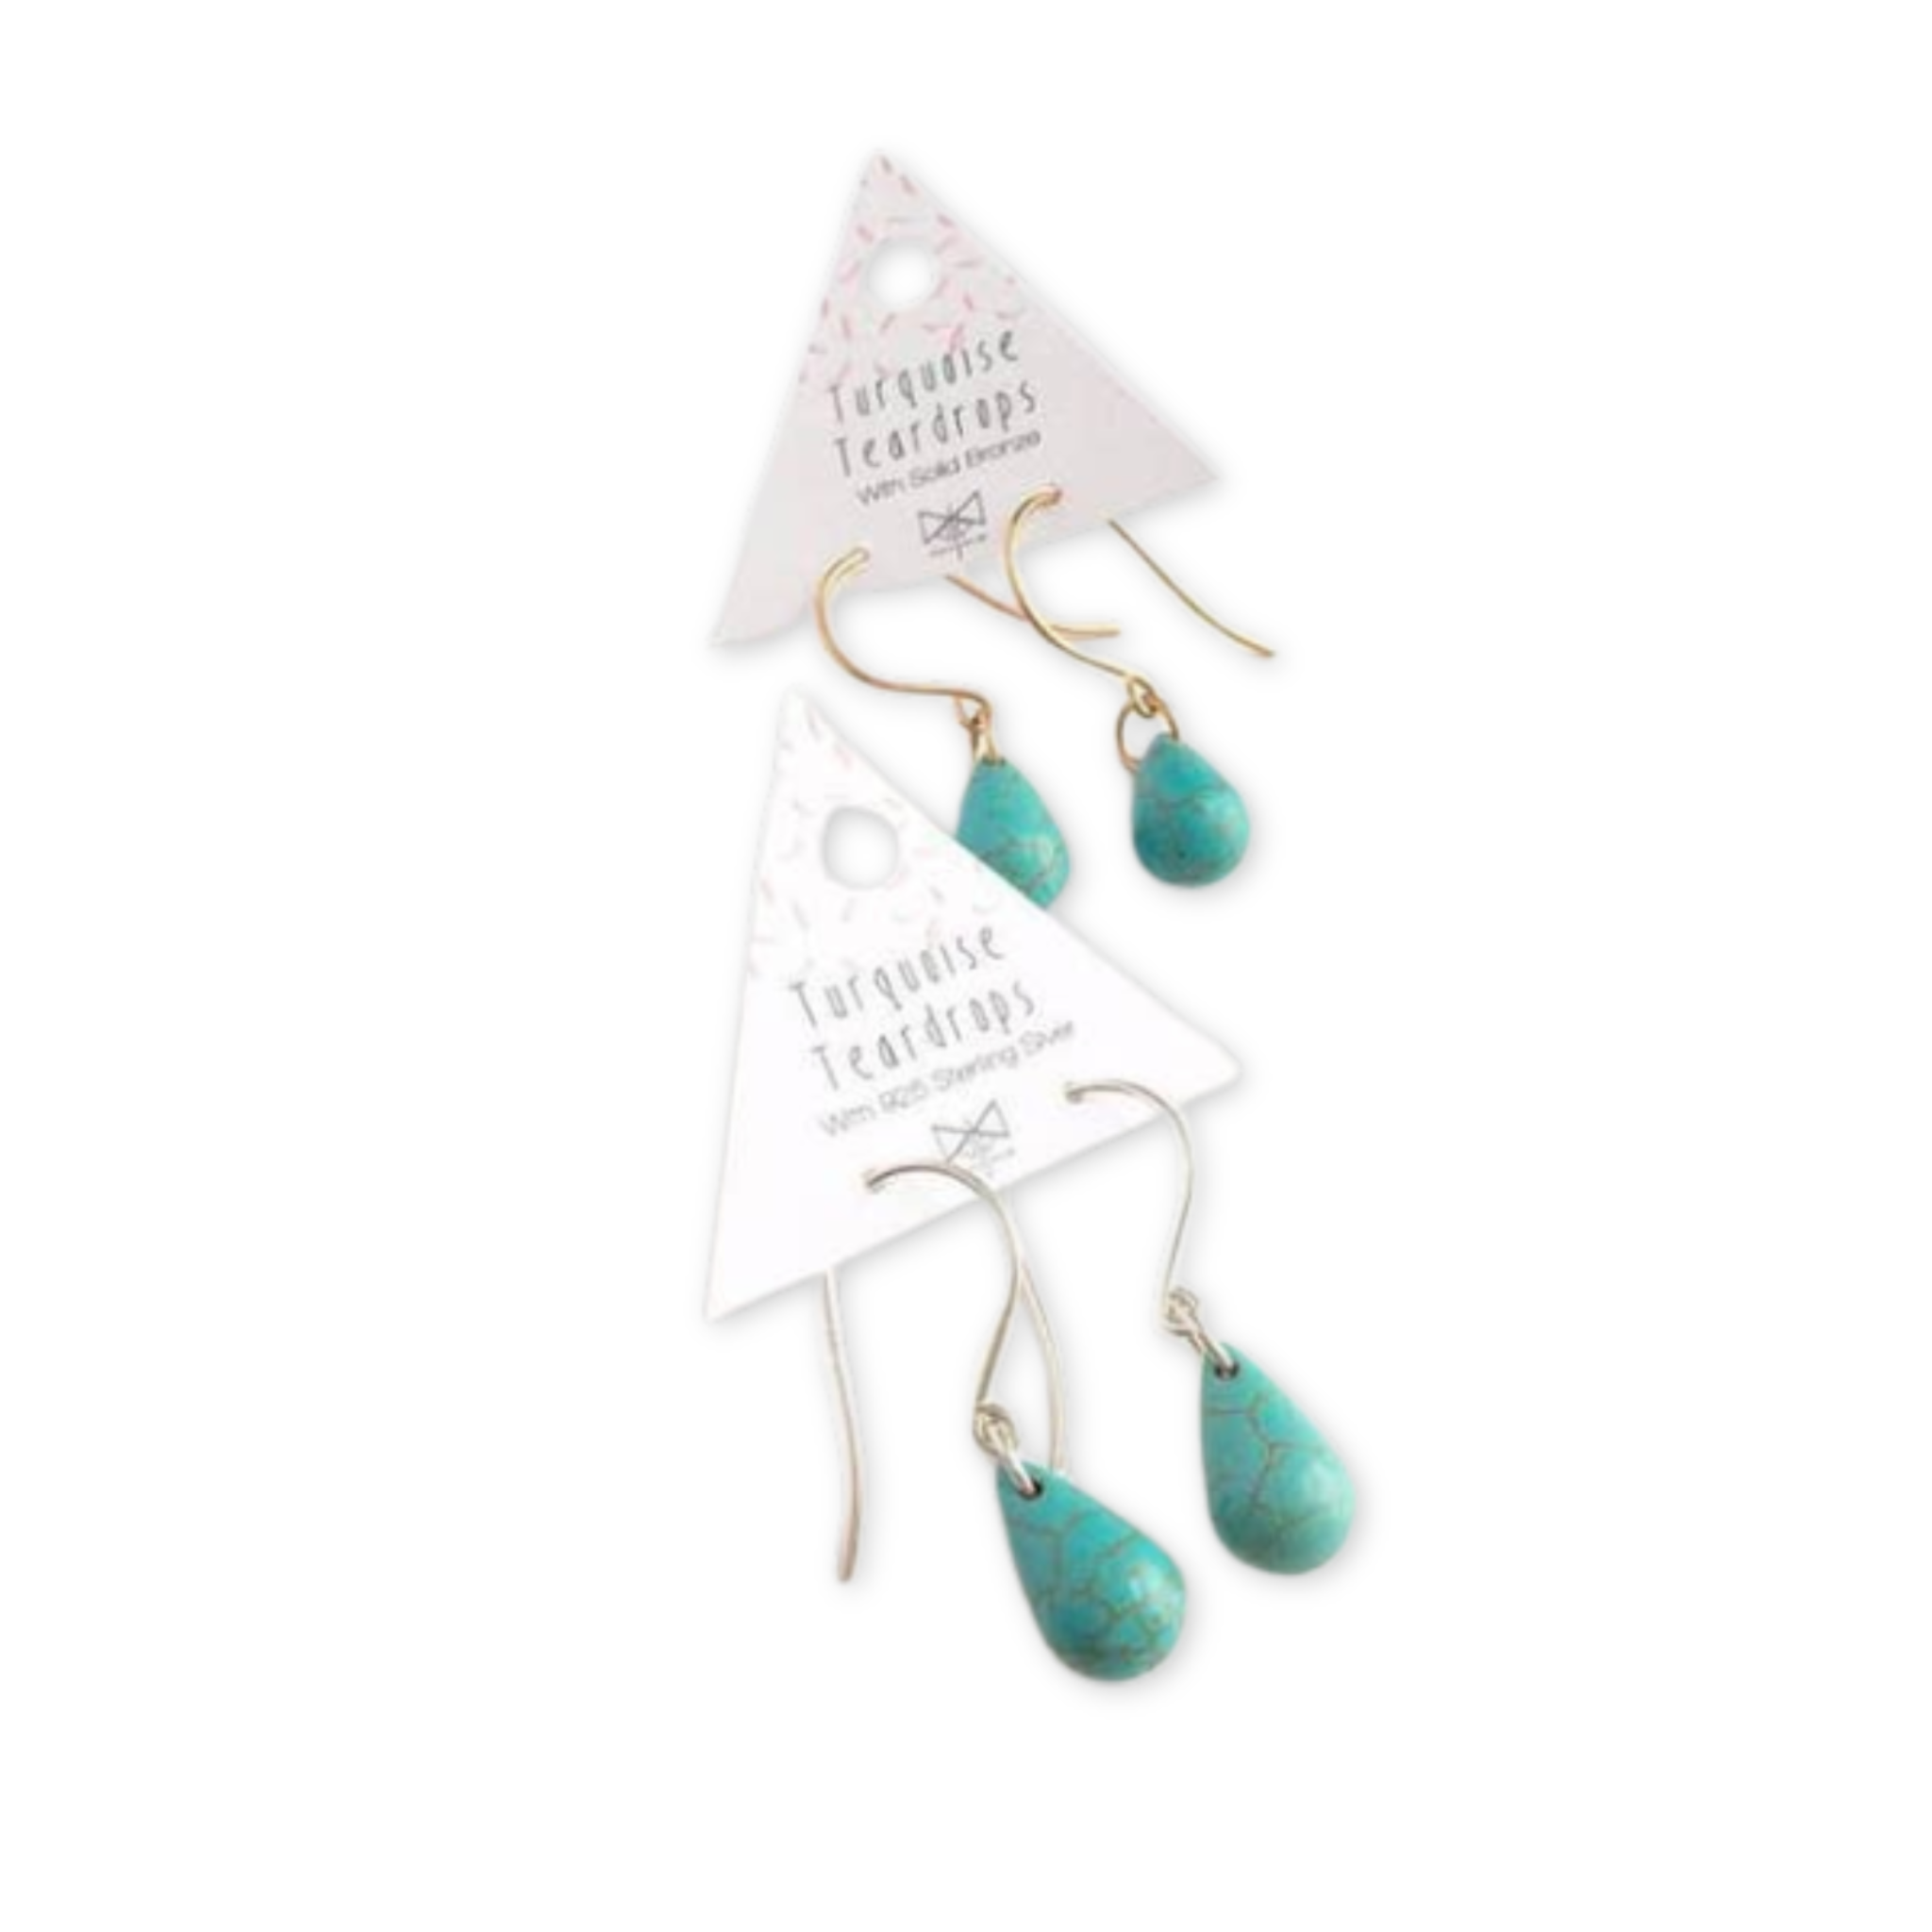 earrings with turquoise pendants in the shape of a teardrop